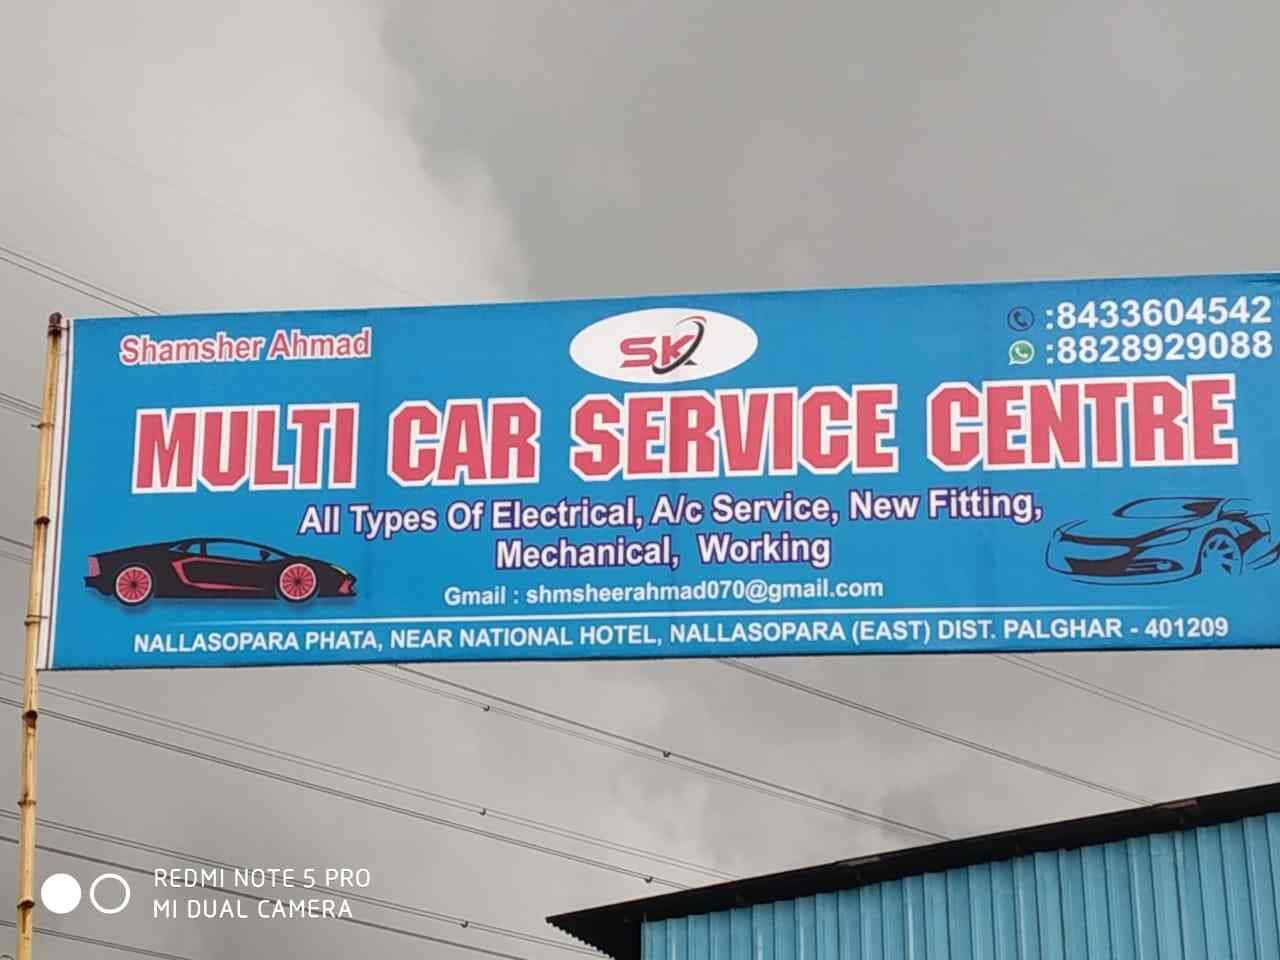 Mlti Car Service Centre